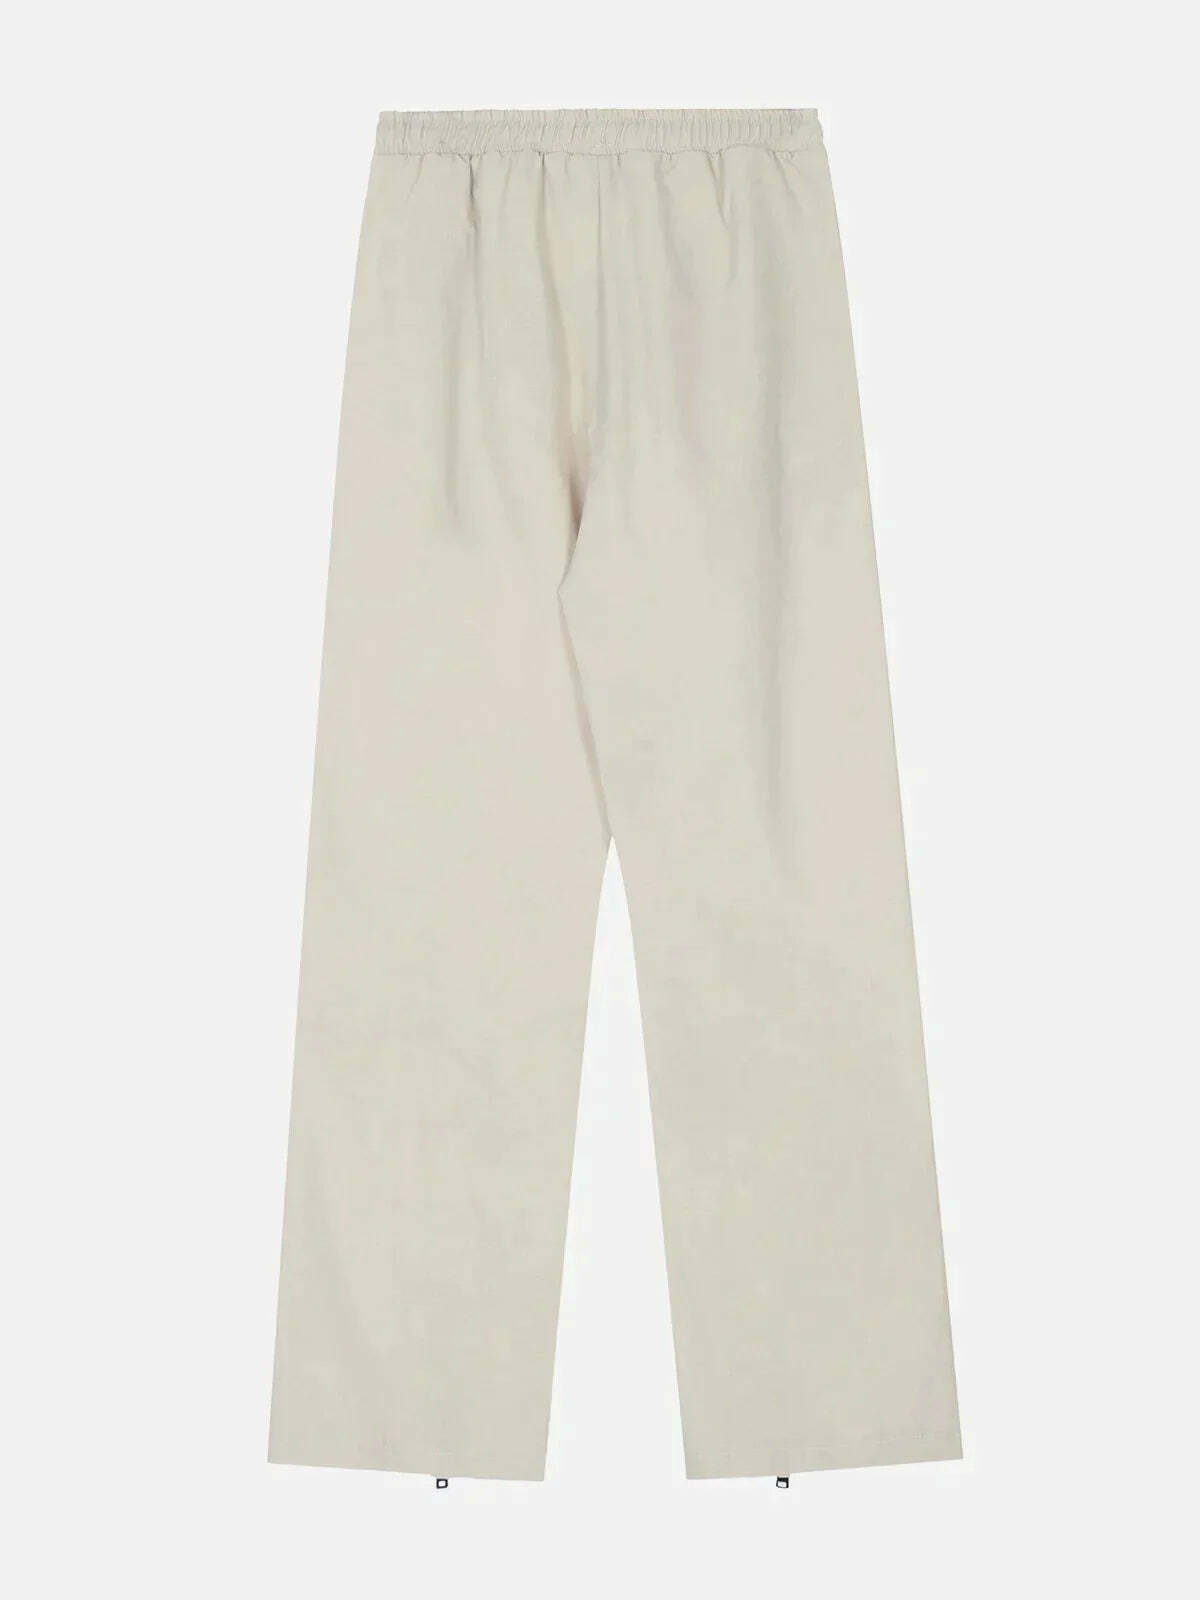 revolutionary splicing zip pants edgy & urban streetwear 3214